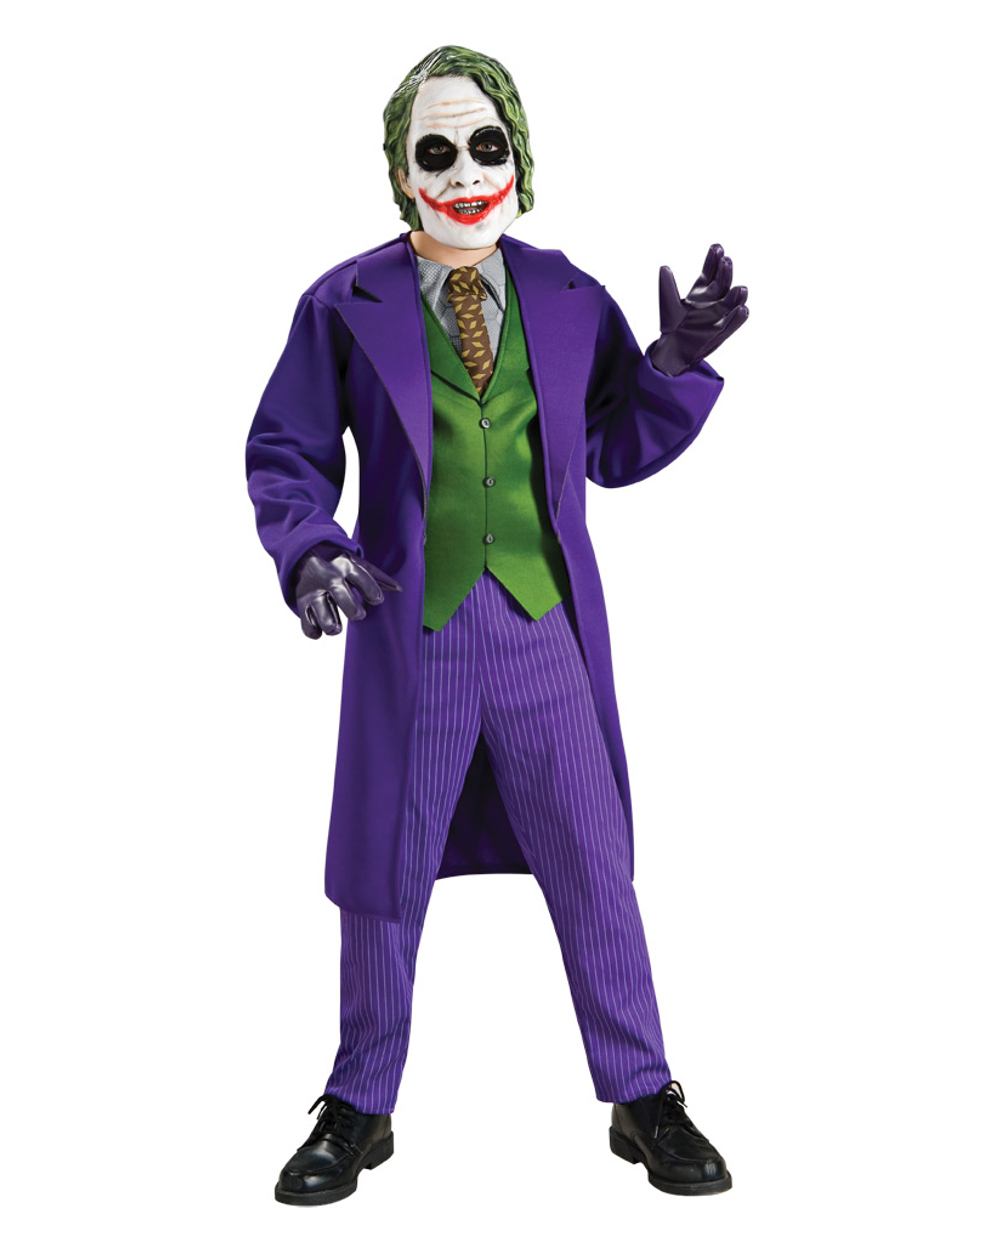 Batman The Joker Deluxe Boy's Halloween Fancy-Dress Costume for Child, S - image 2 of 2